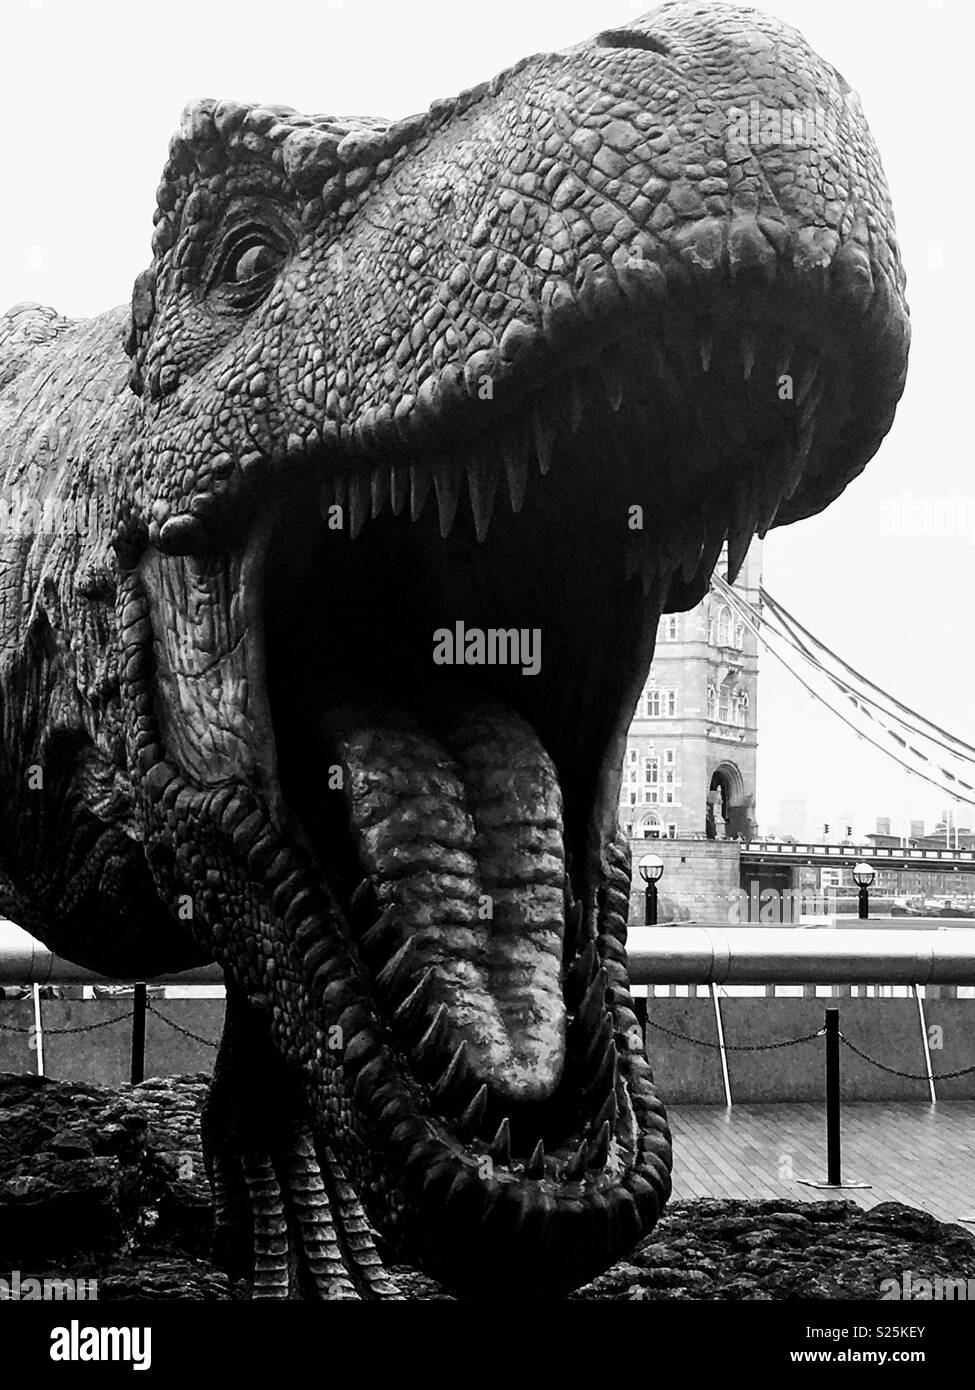 Dinosaur near City Hall and Tower Bridge in London Stock Photo